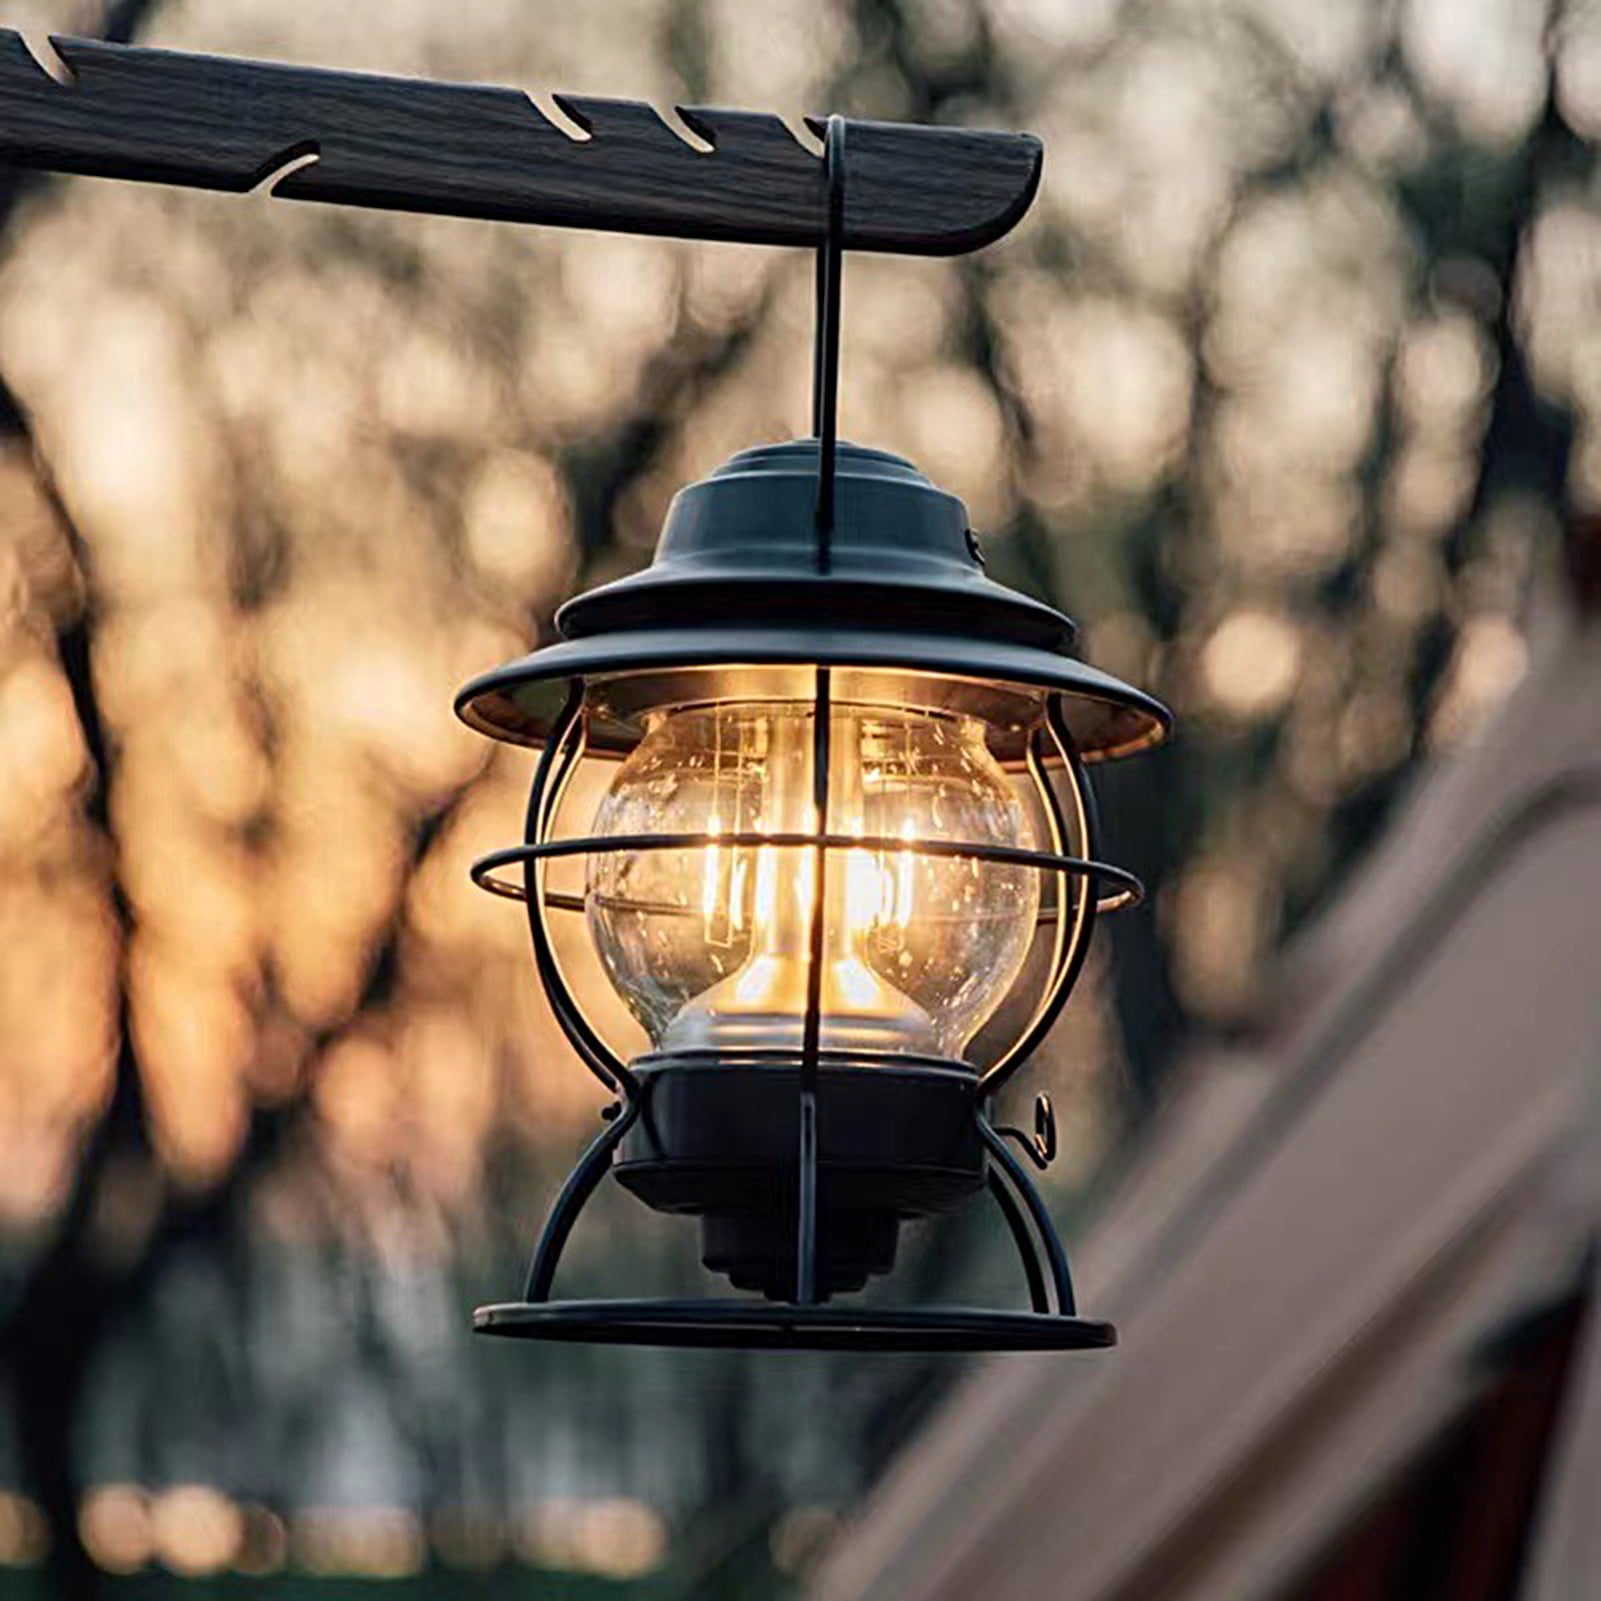 1pc LED Camping Lantern Hanging, Super Bright Portable Survival Lanterns,  Camping Light High Brightness Metal Retro Mini Hanging Camping USB Light For